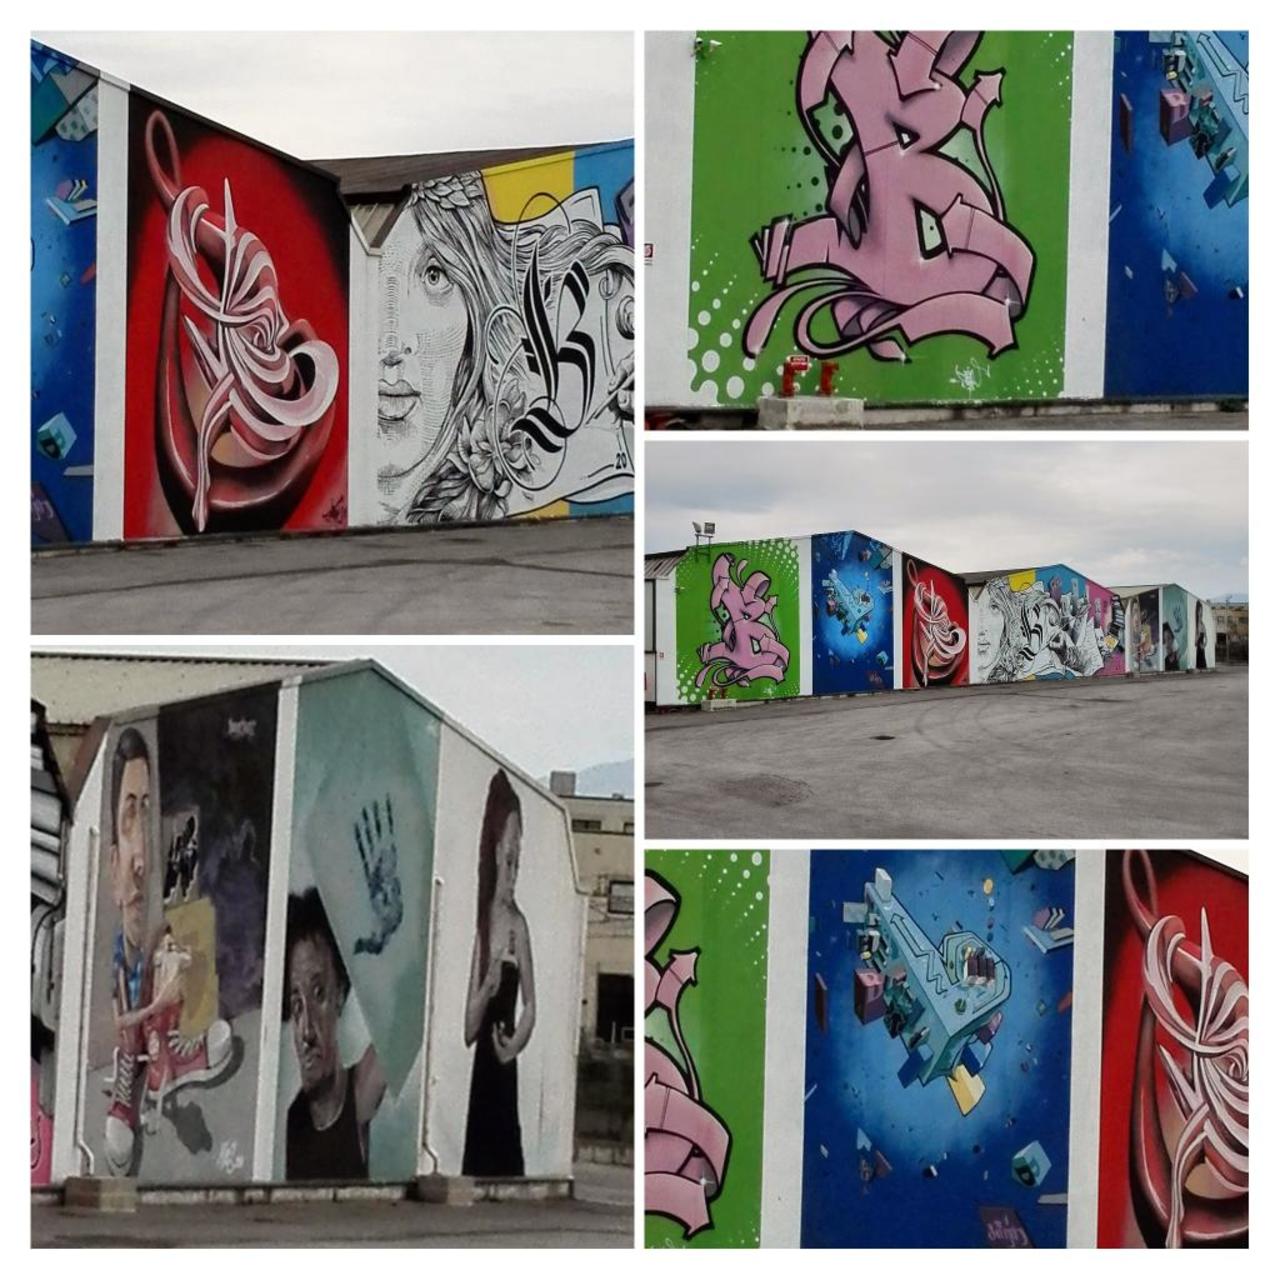 #salerno #art #arte #mural #streetart #graffiti #wallart #intercarta_salerno http://t.co/5xS9nFGkK7